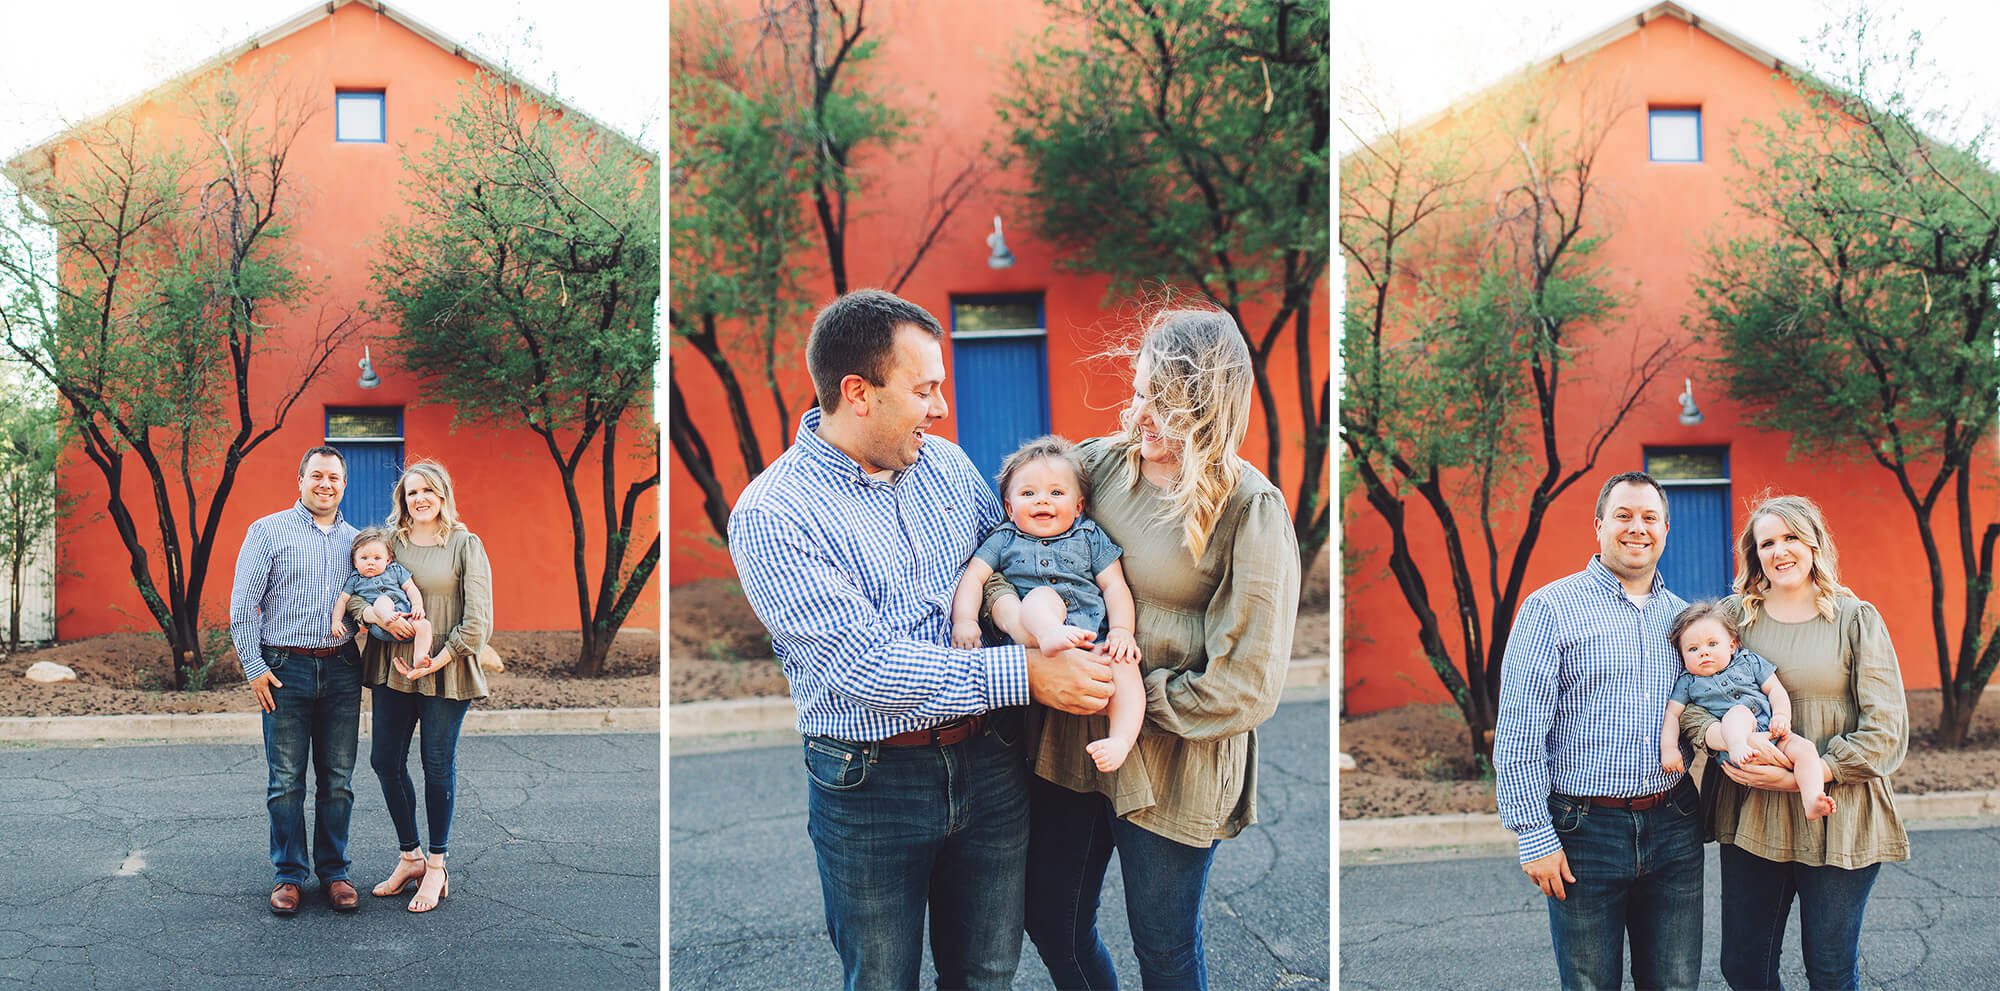 The Ballington family in downtown Tucson for their family photo session